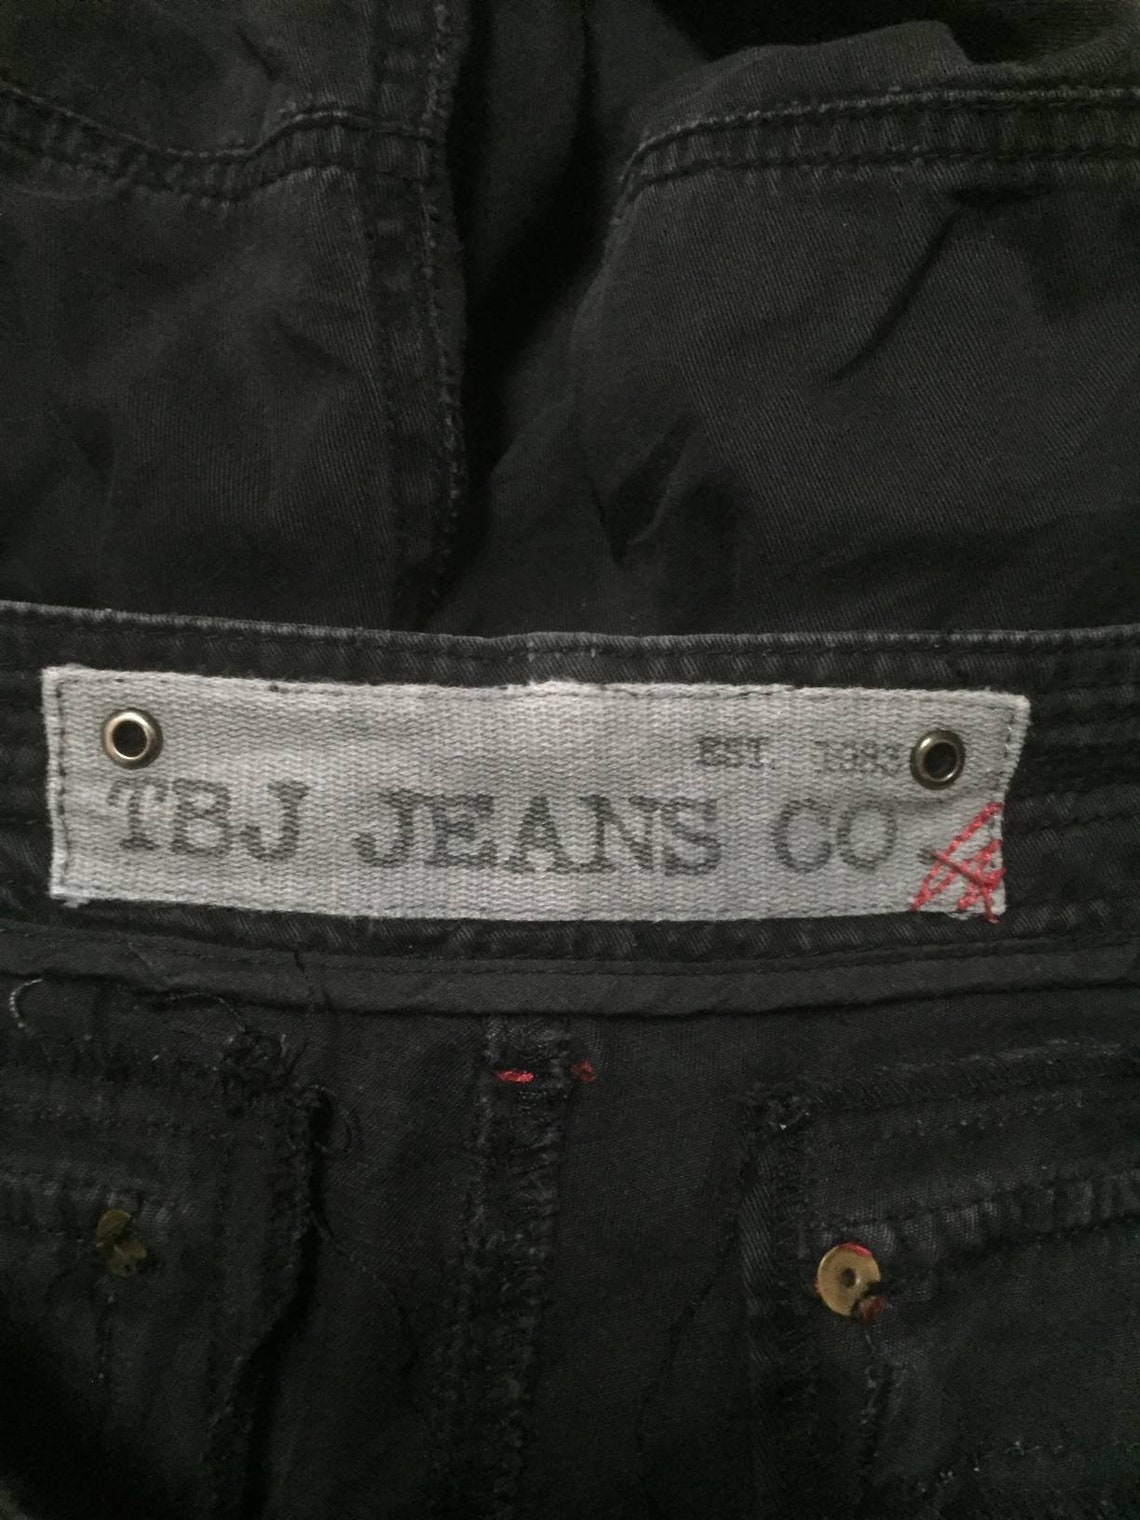 TBJ Jeans co multi pocket drawstring cargo pants Spike | Etsy